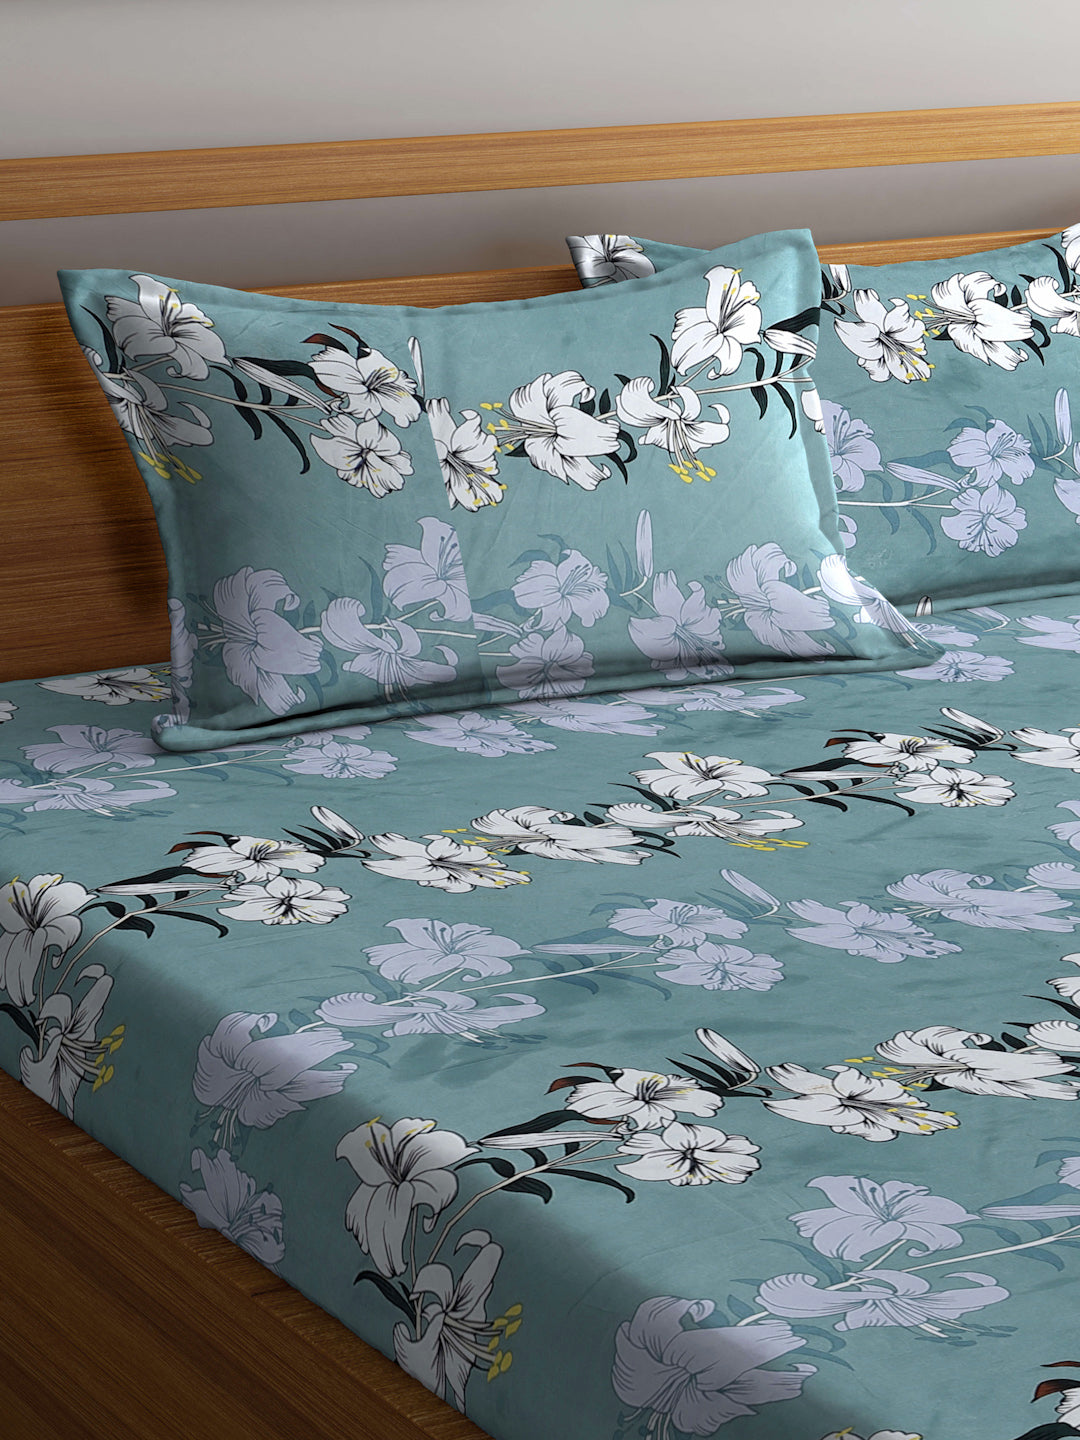 Klotthe Multi Floral 300 TC Cotton Blend Super King Double Bedsheet Set in Book Fold Packing